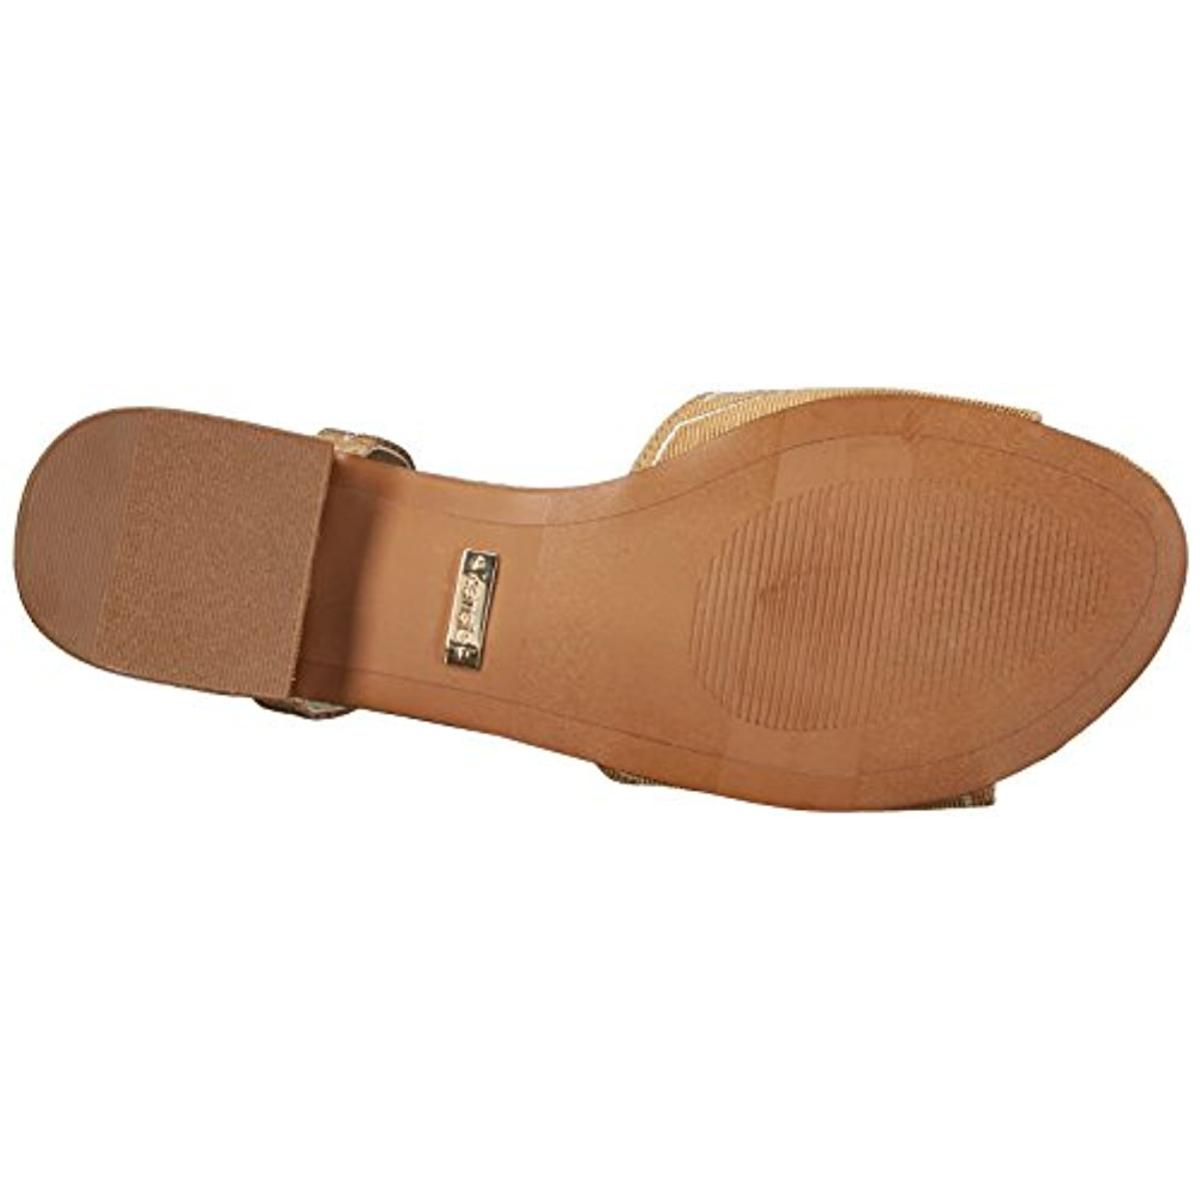 Kensie Womens Katara Embroidered Tassel Open Toe Flat Sandals Shoes ...